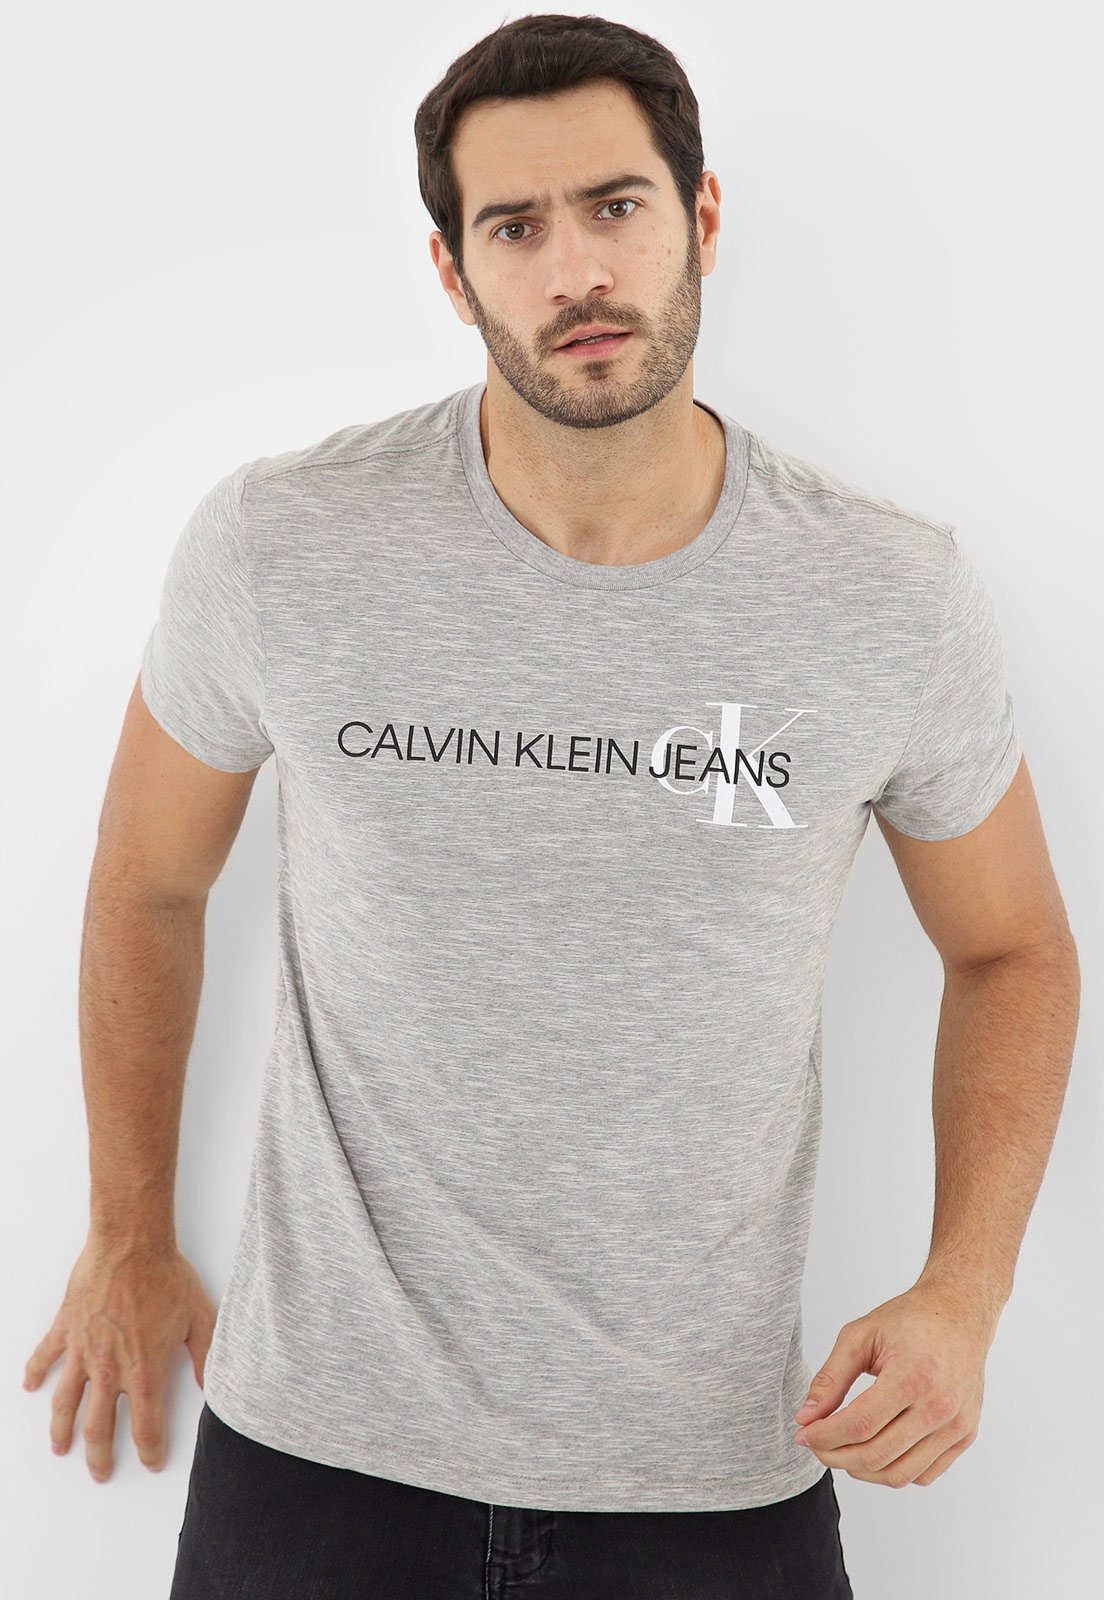 https://static.dafiti.com.br/p/Calvin-Klein-Jeans-Camiseta-Calvin-Klein-Jeans-Lettering-Cinza-4525-5790525-1-zoom.jpg